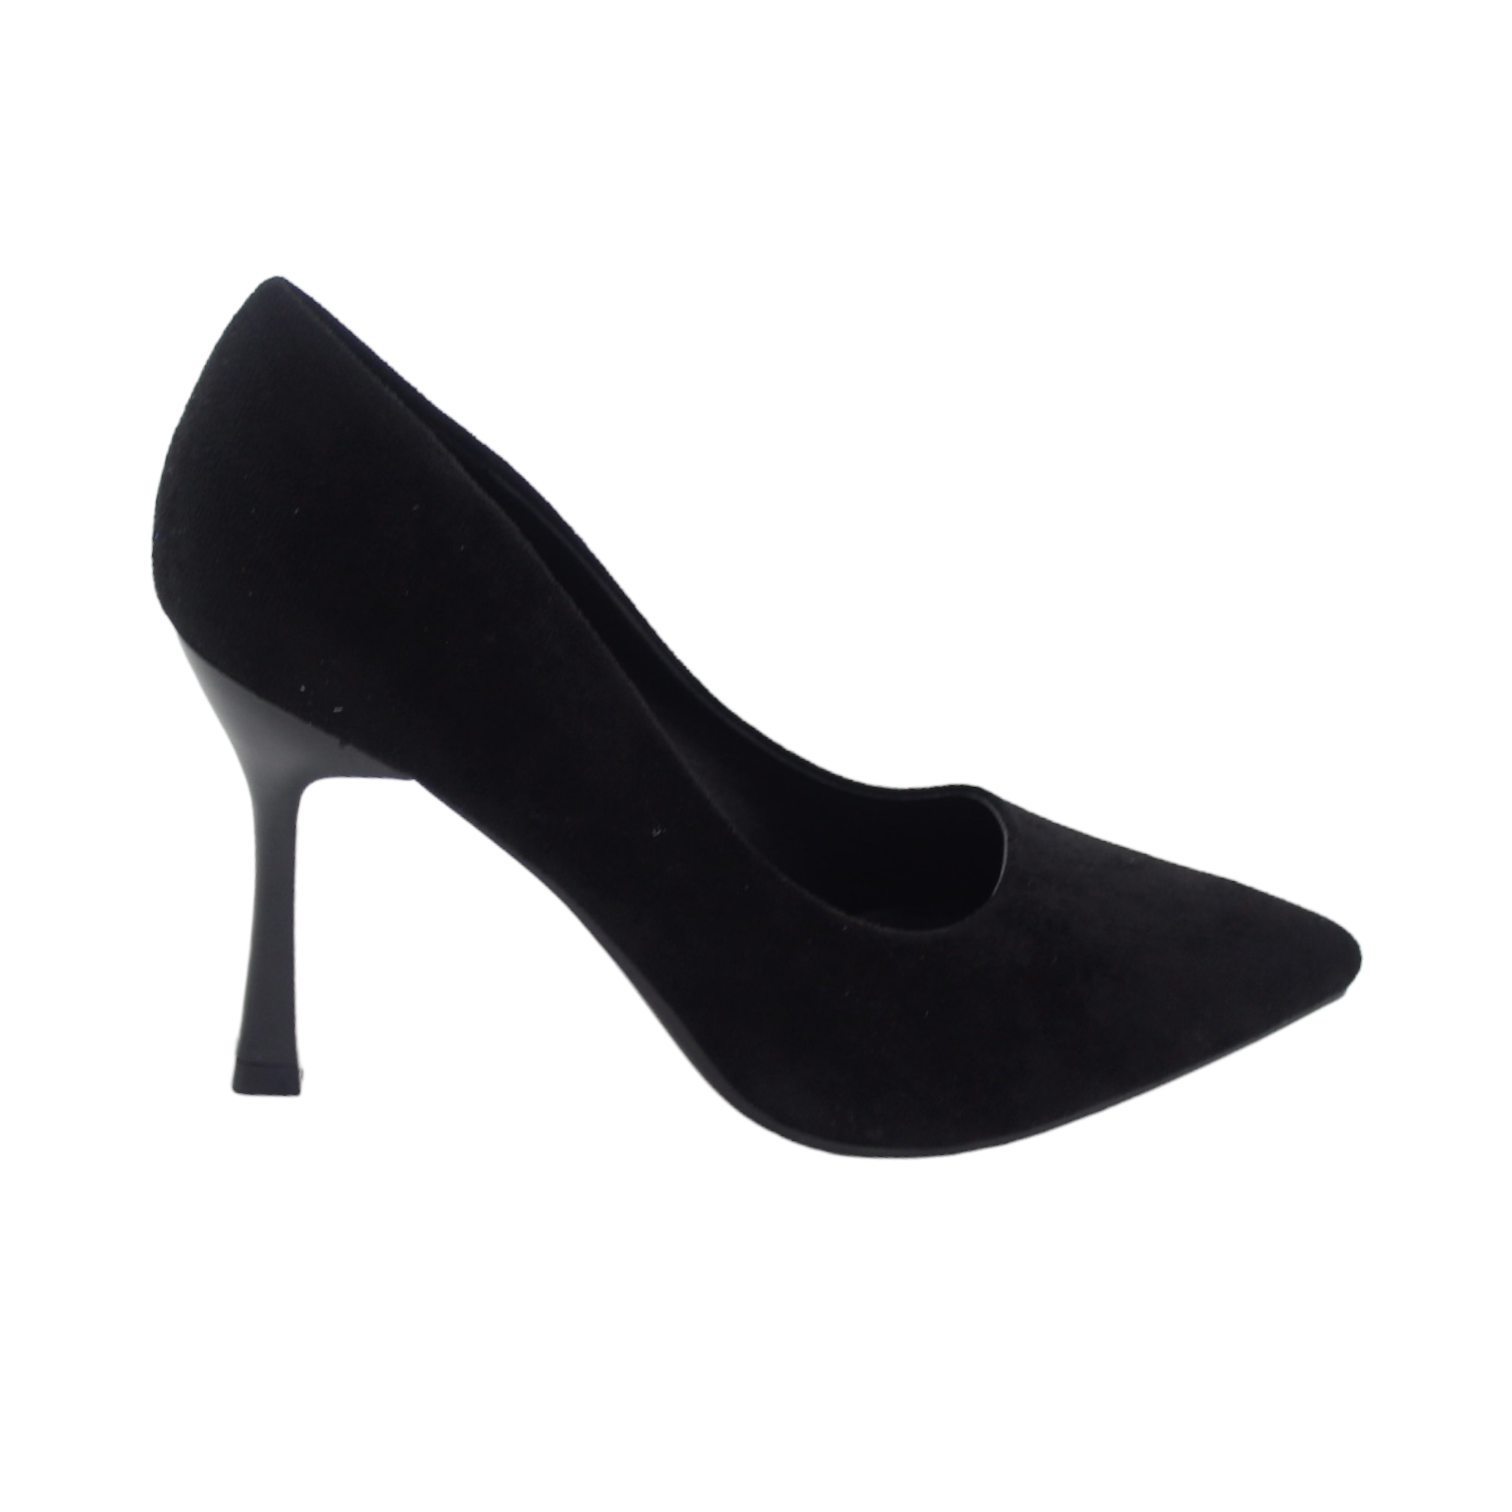 Chad micro fibre KJ1701-1 court on 9.5cm heel black